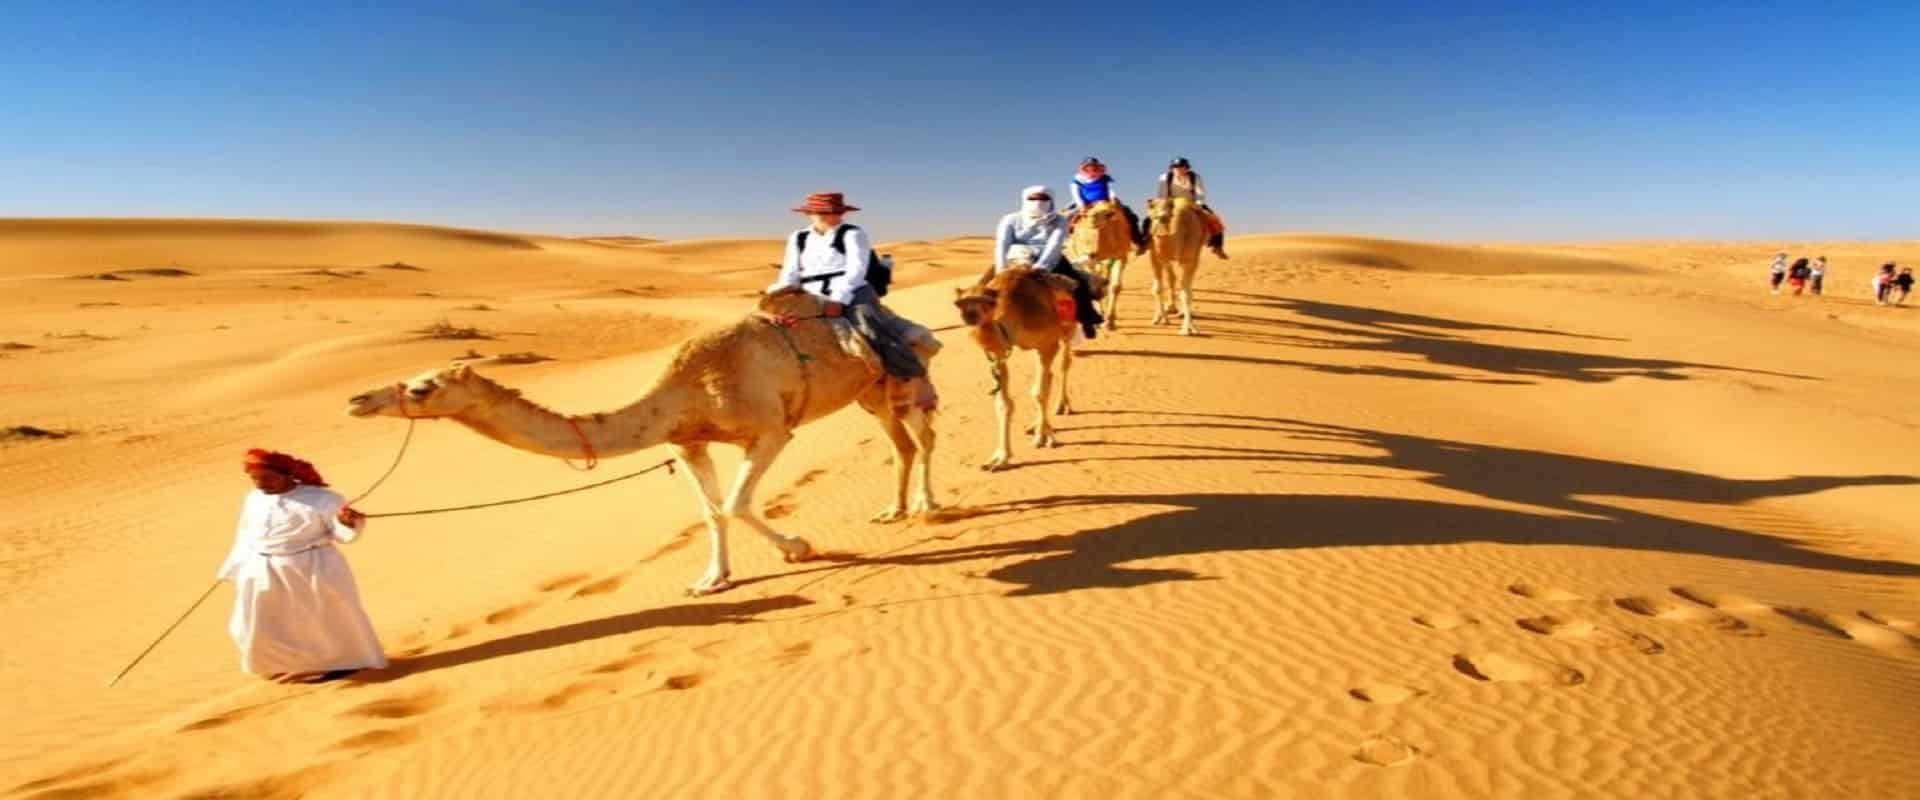 Dubai Gamel Riding